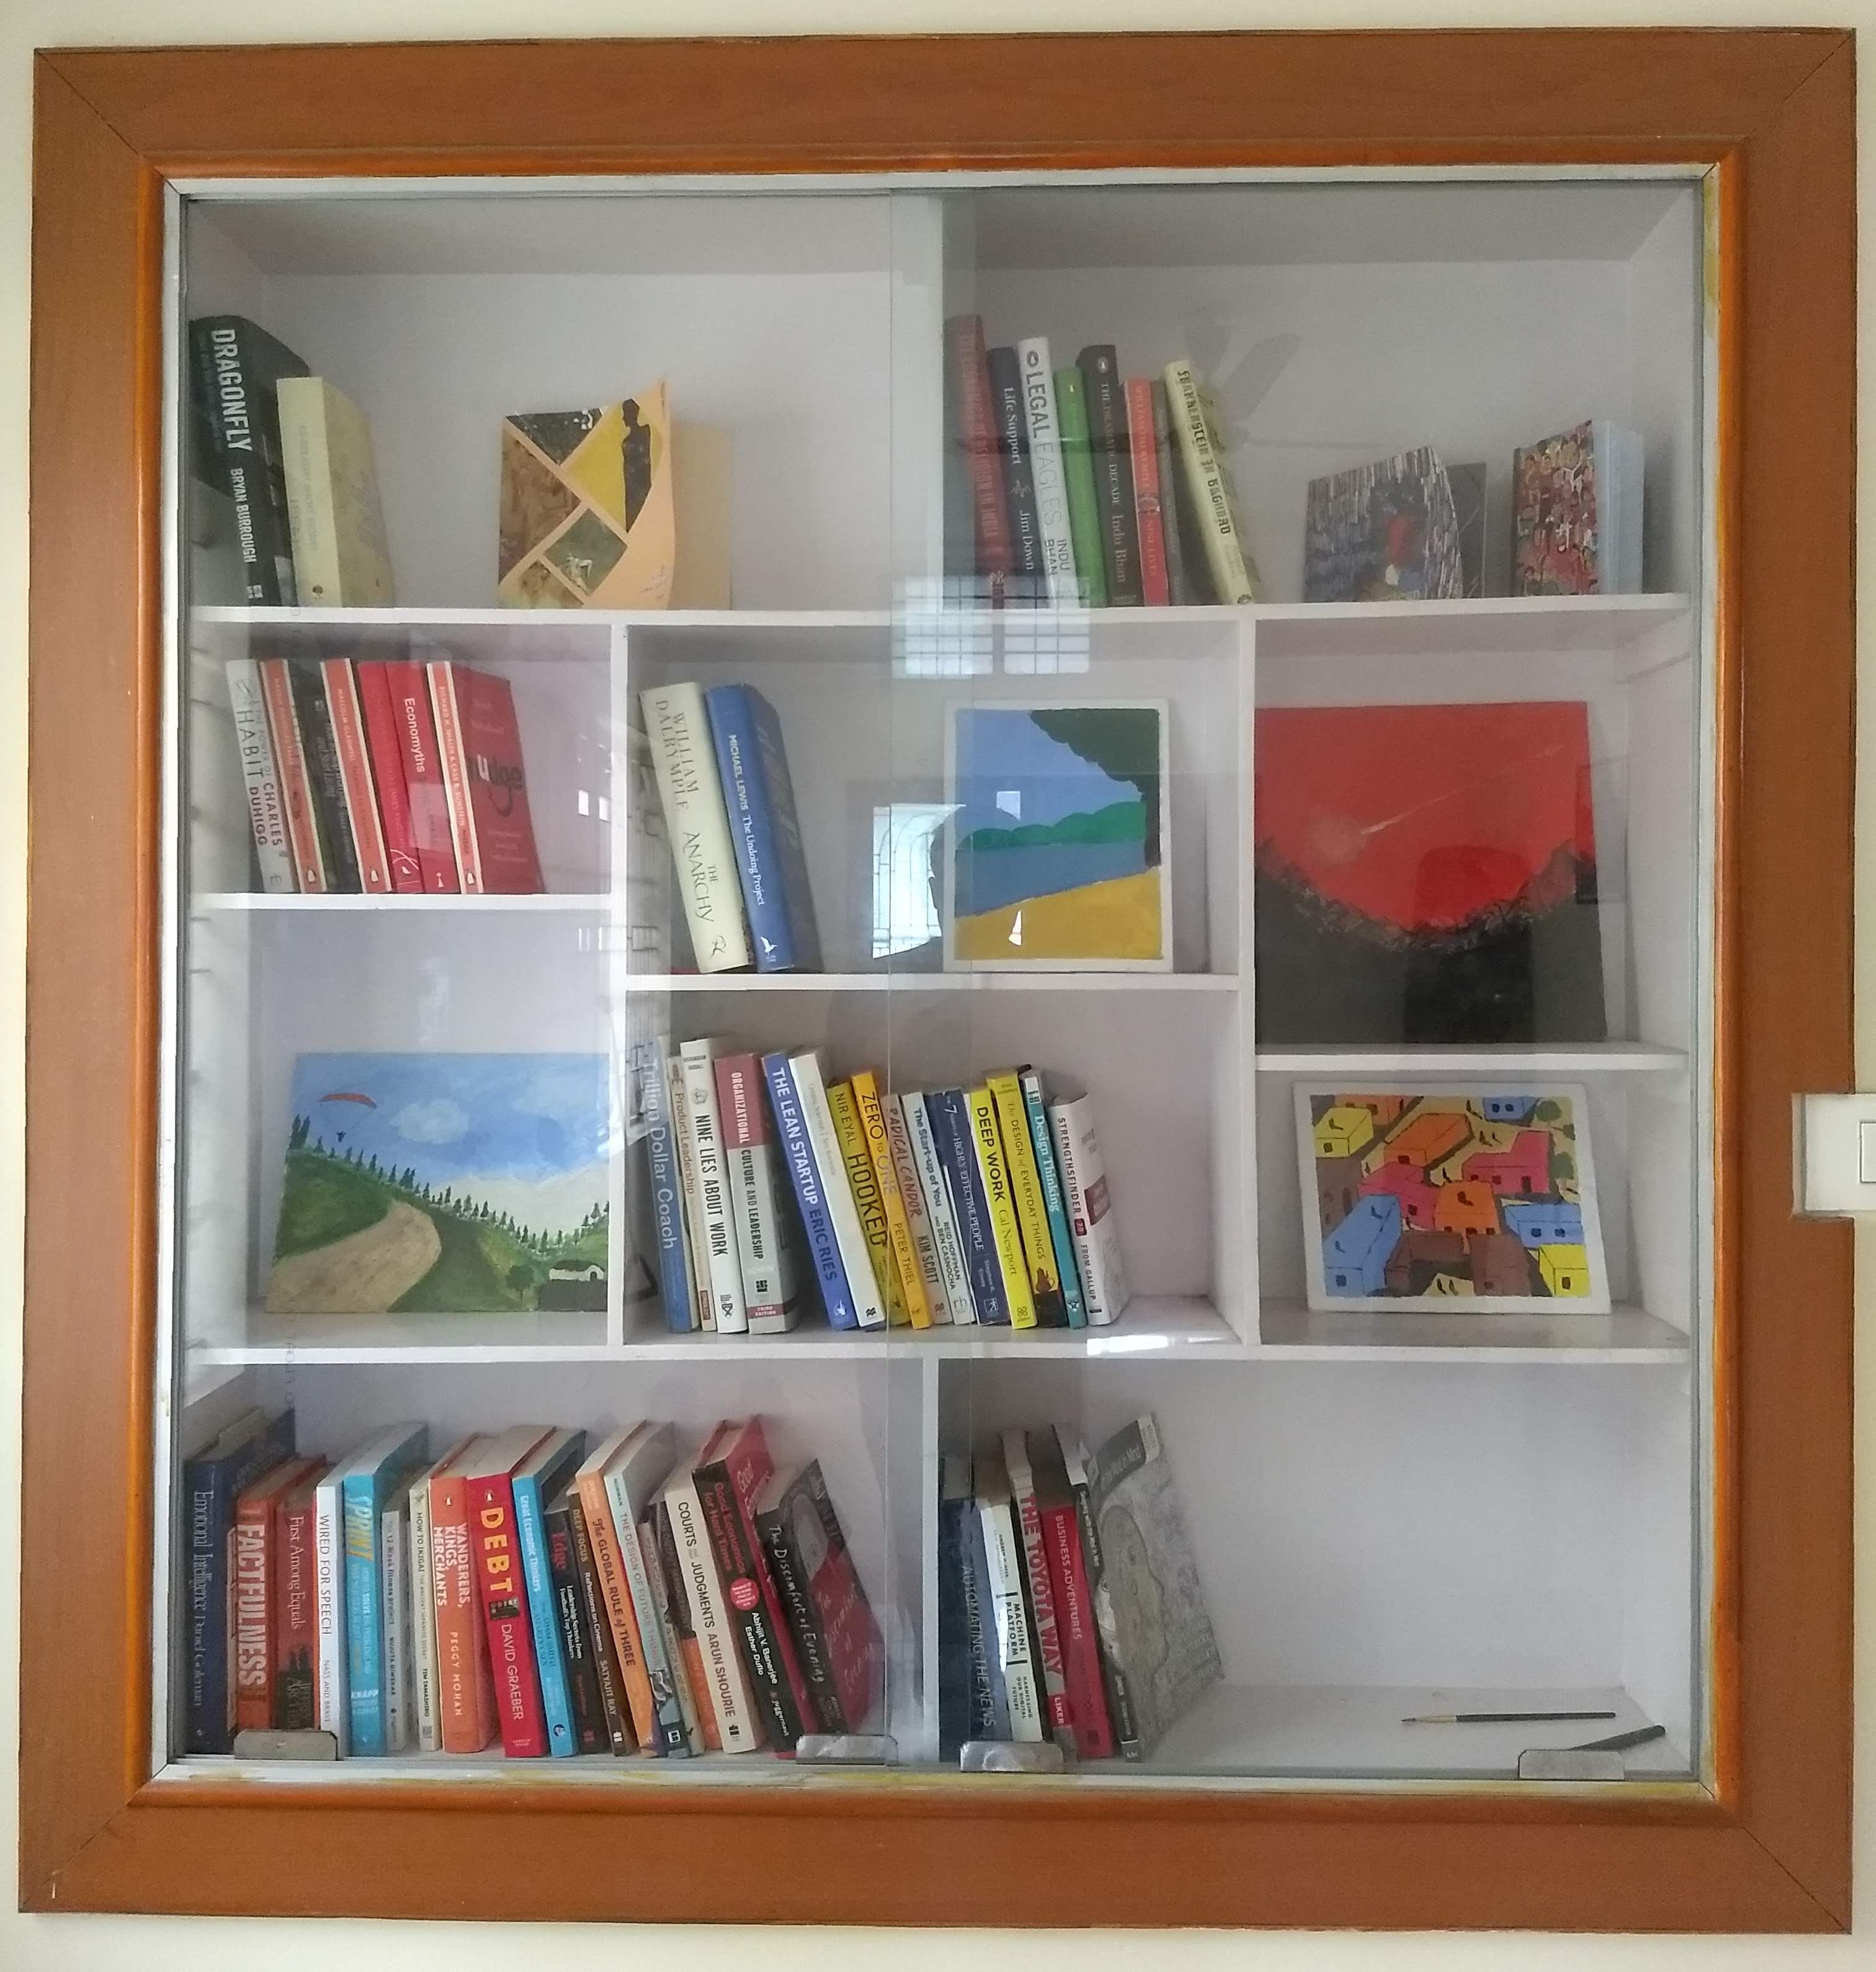 Pravendra’s bookshelf (circa, October 2021)